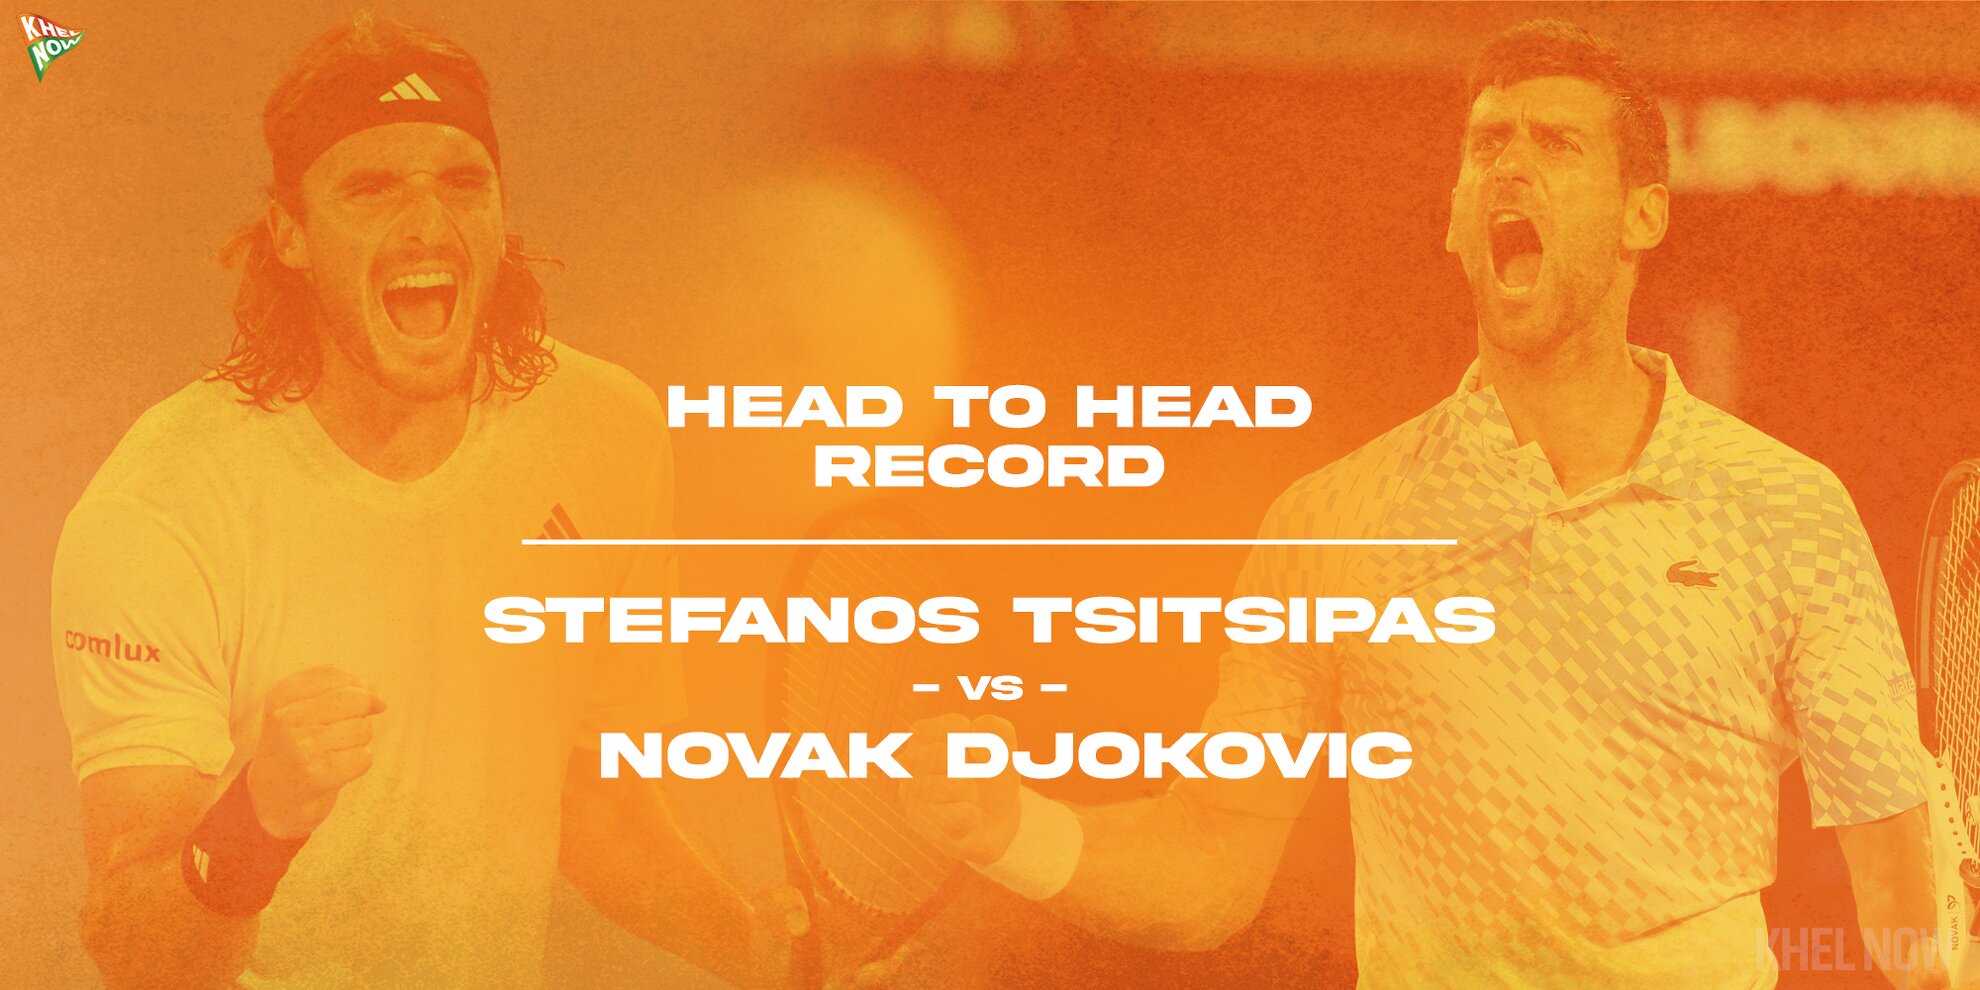 Stefanos Tsitsipas vs Novak Djokovic head to head